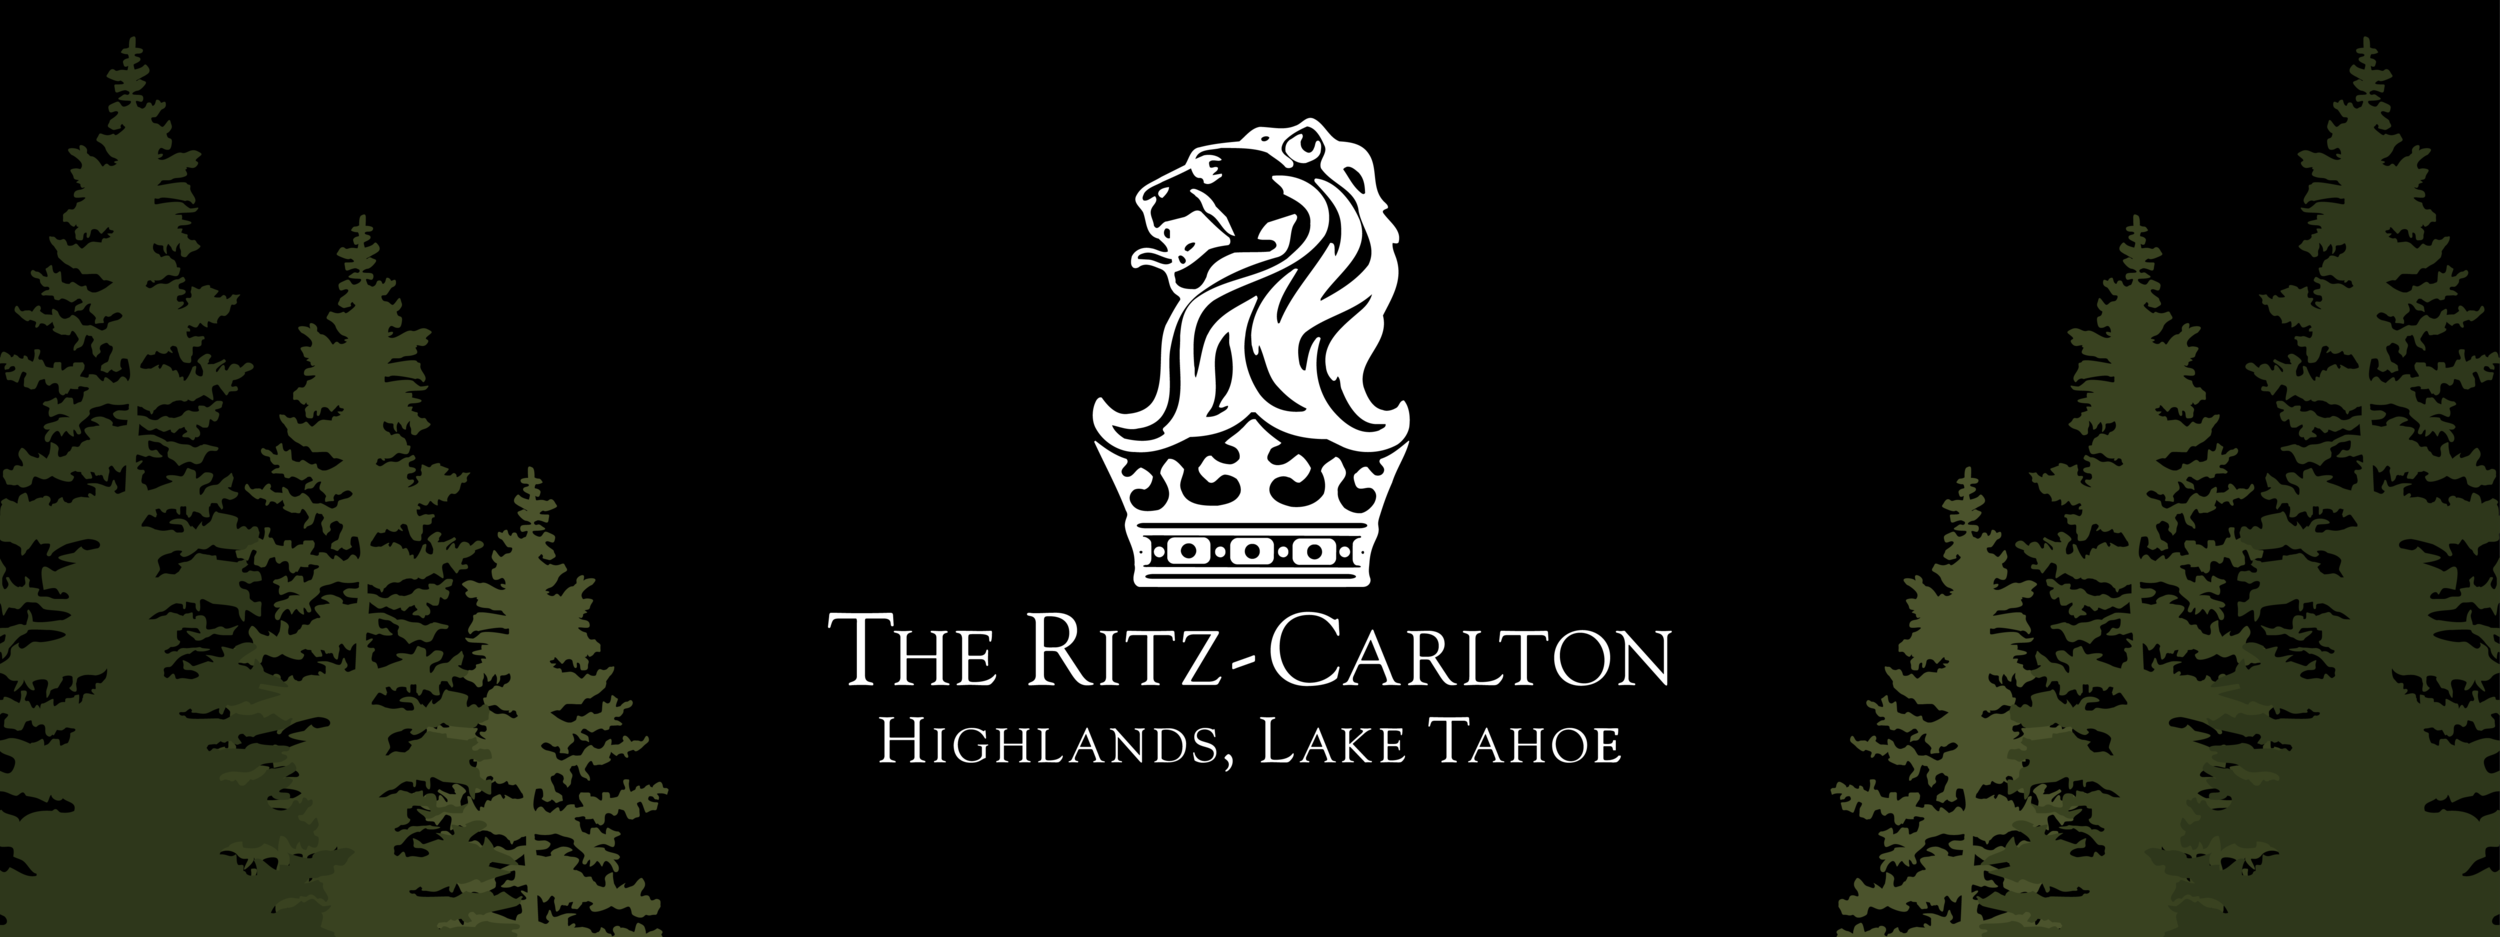 5-20150403_Ritz-Carlton_web_banner-01.png